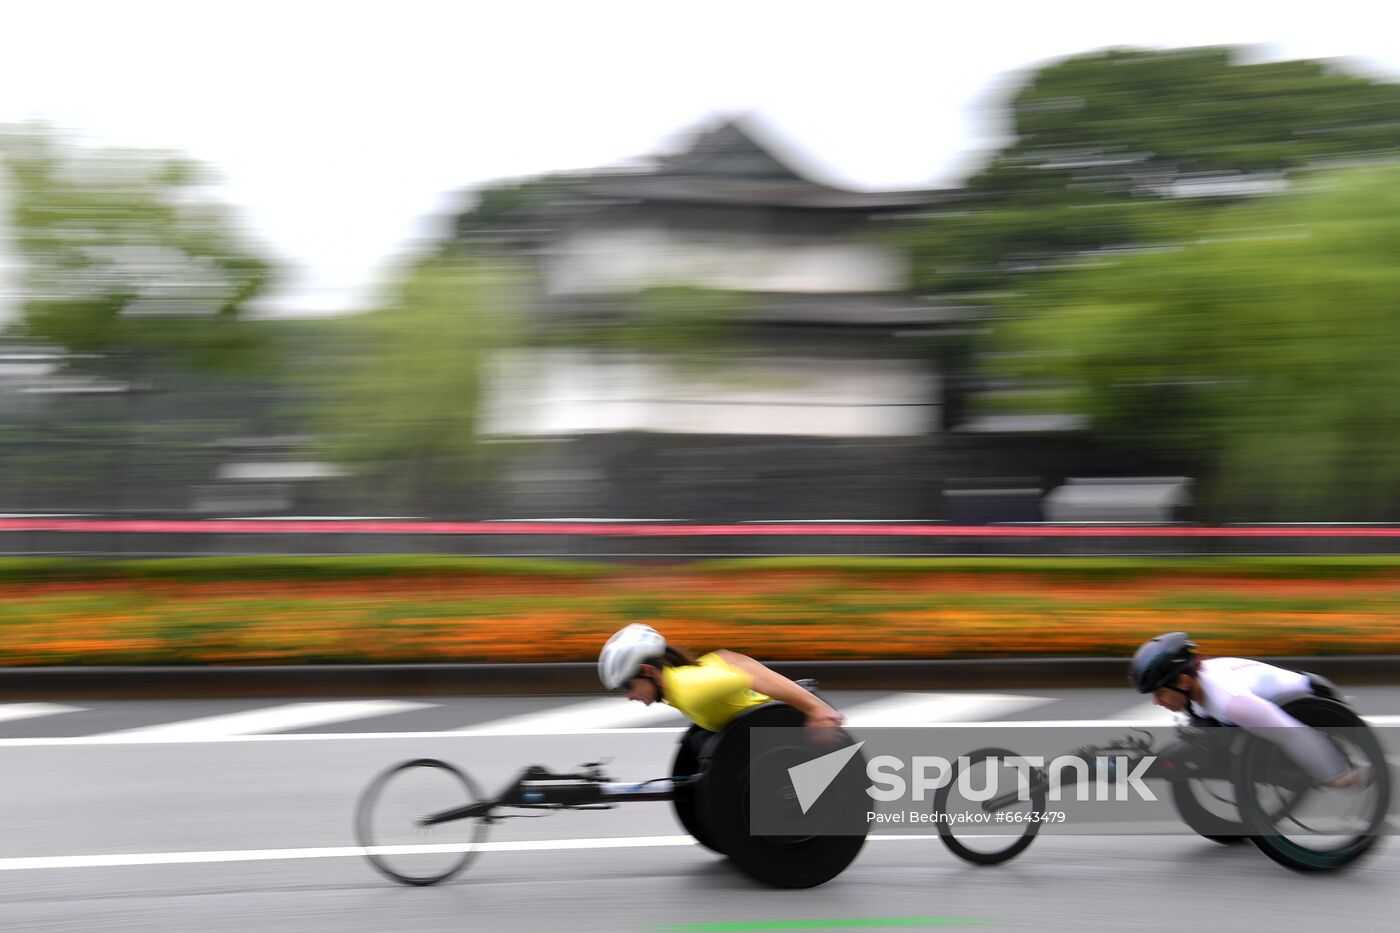 Japan Paralympics 2020 Athletics Marathon